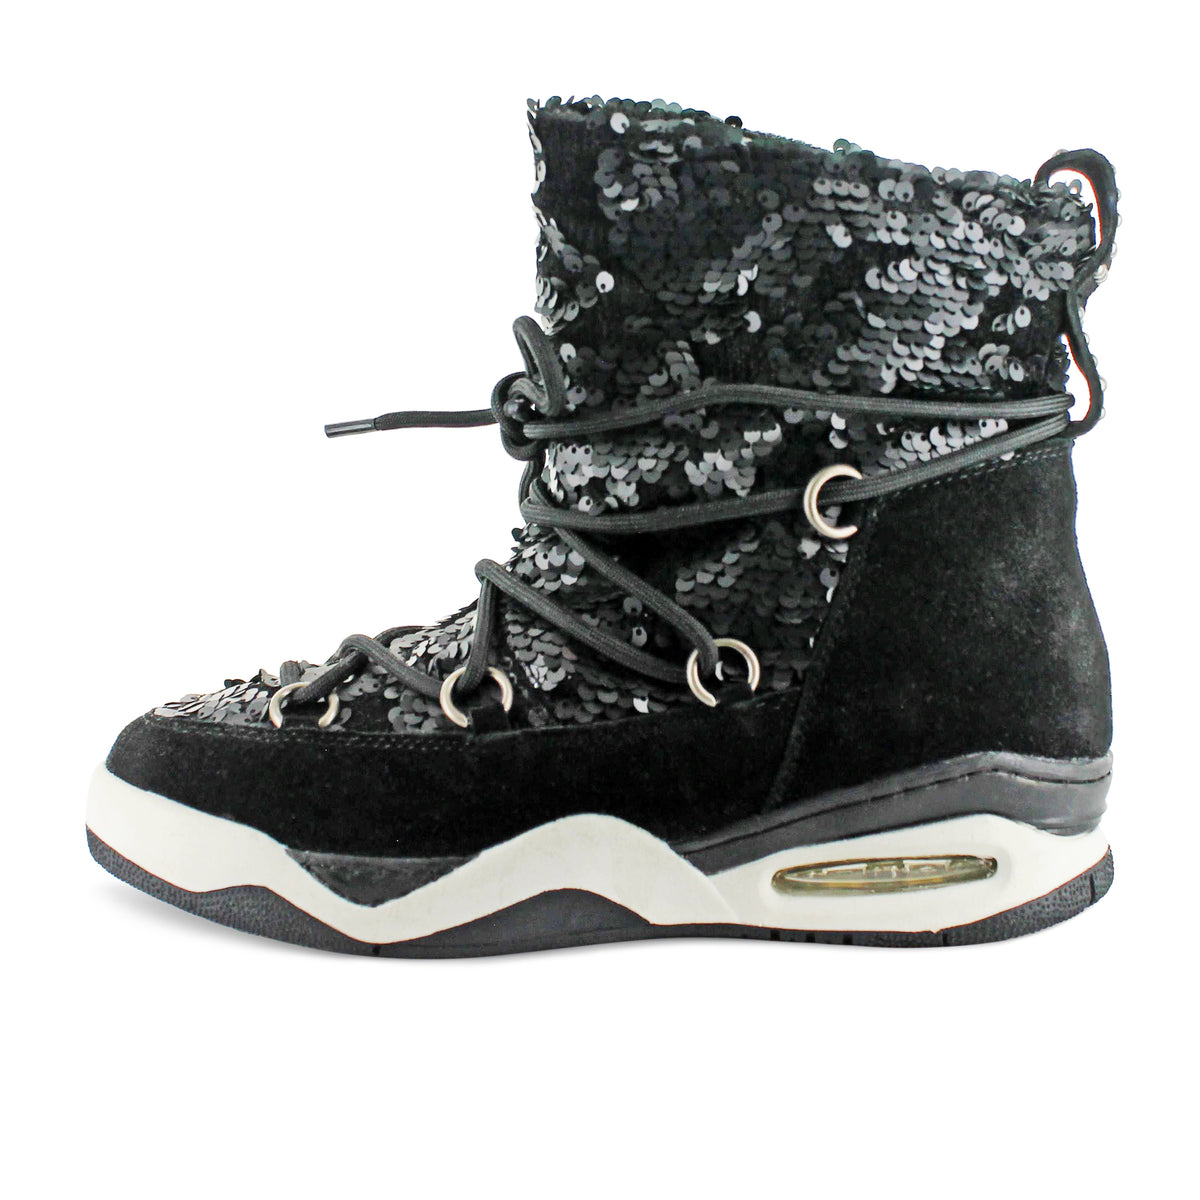 A9-02 - Black Sequences Sneaker Boot